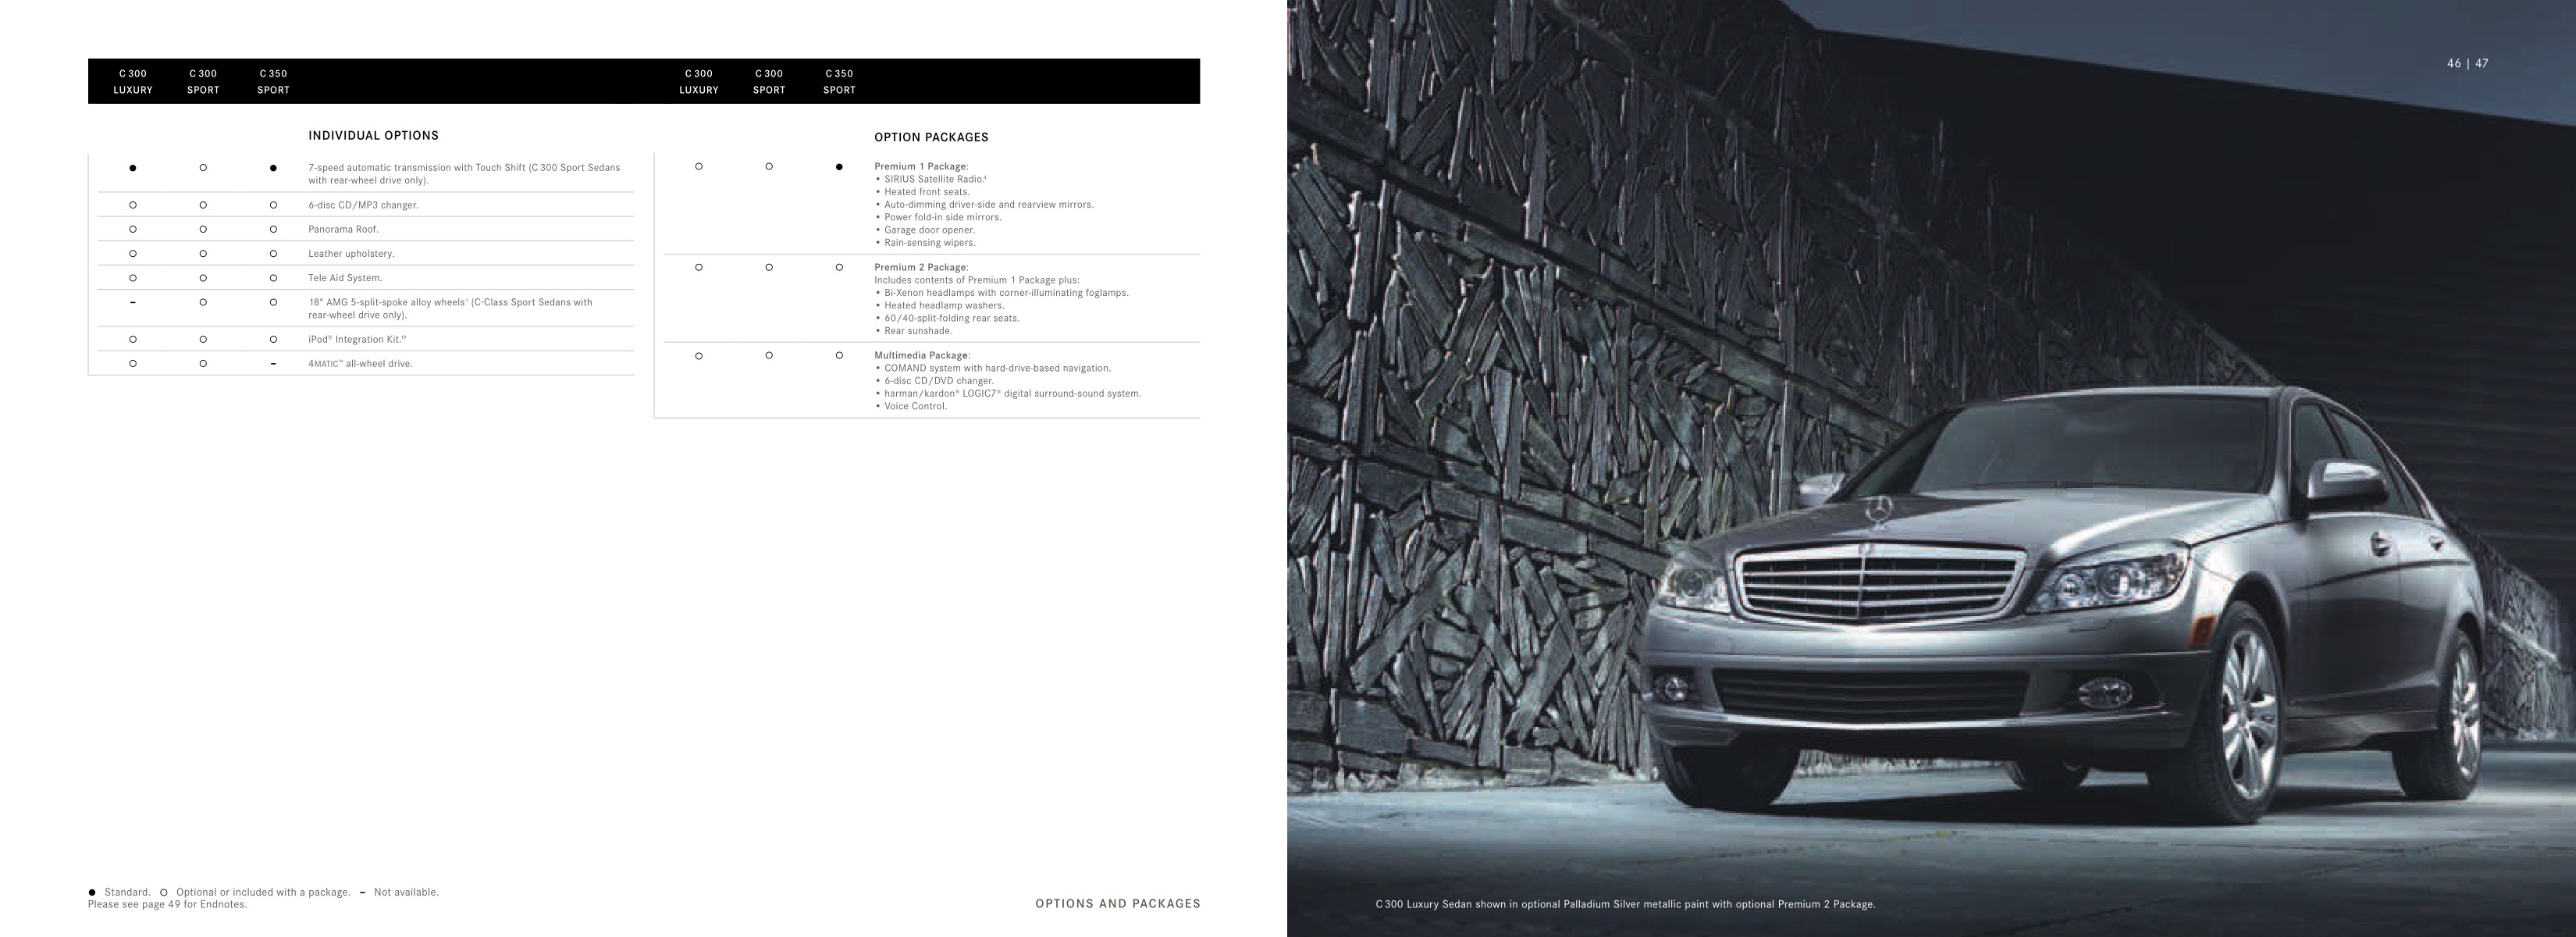 2008 Mercedes-Benz C-Class Brochure Page 16